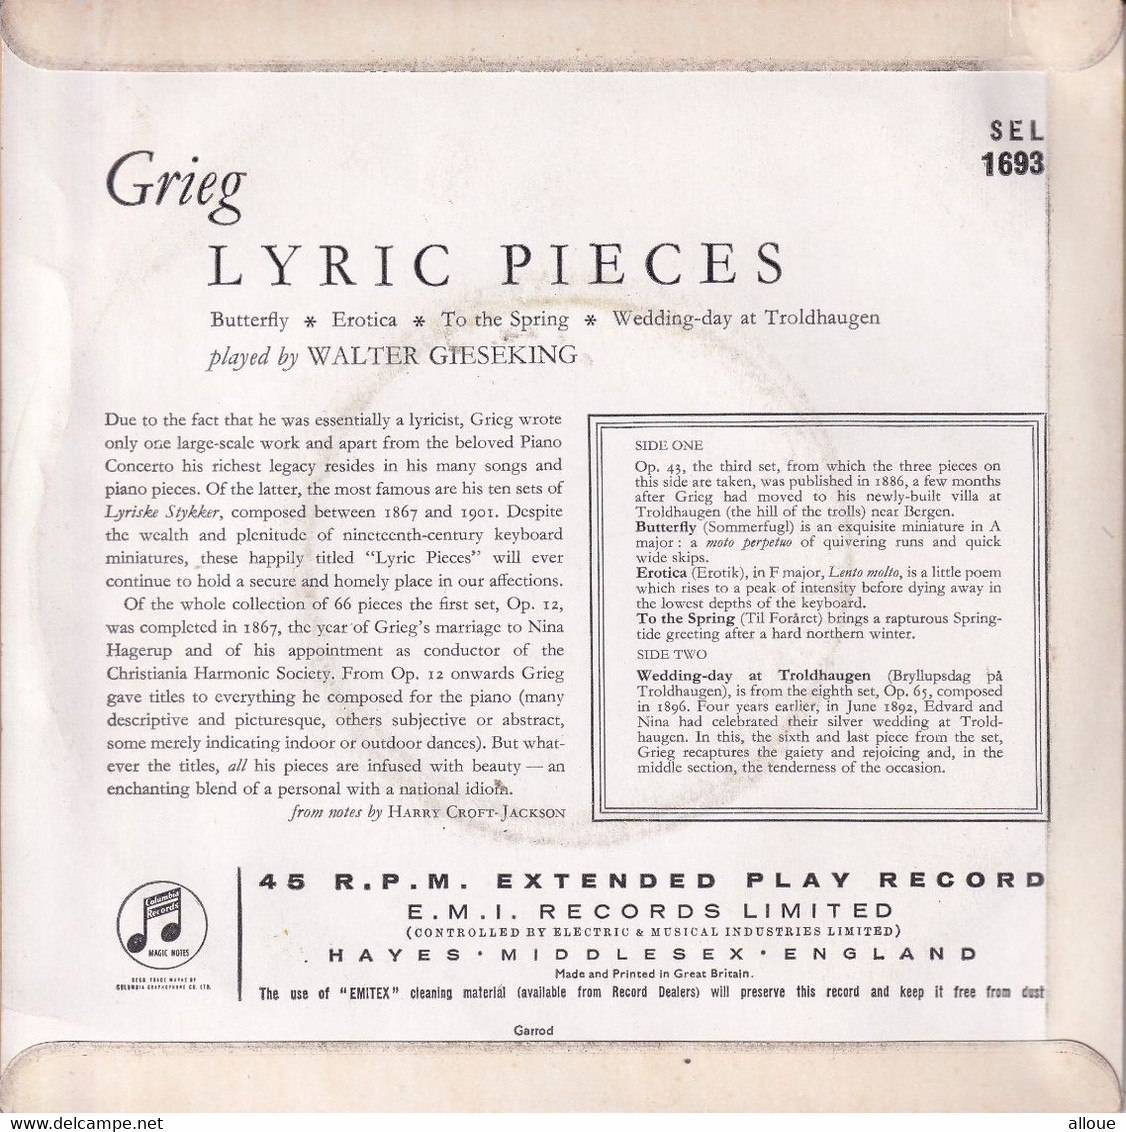 WALTER GIESSEKING -  UK EP - GRIEG - LYRIC PIECES - GIESEKING - BUTTERFLY + 3 - Klassik